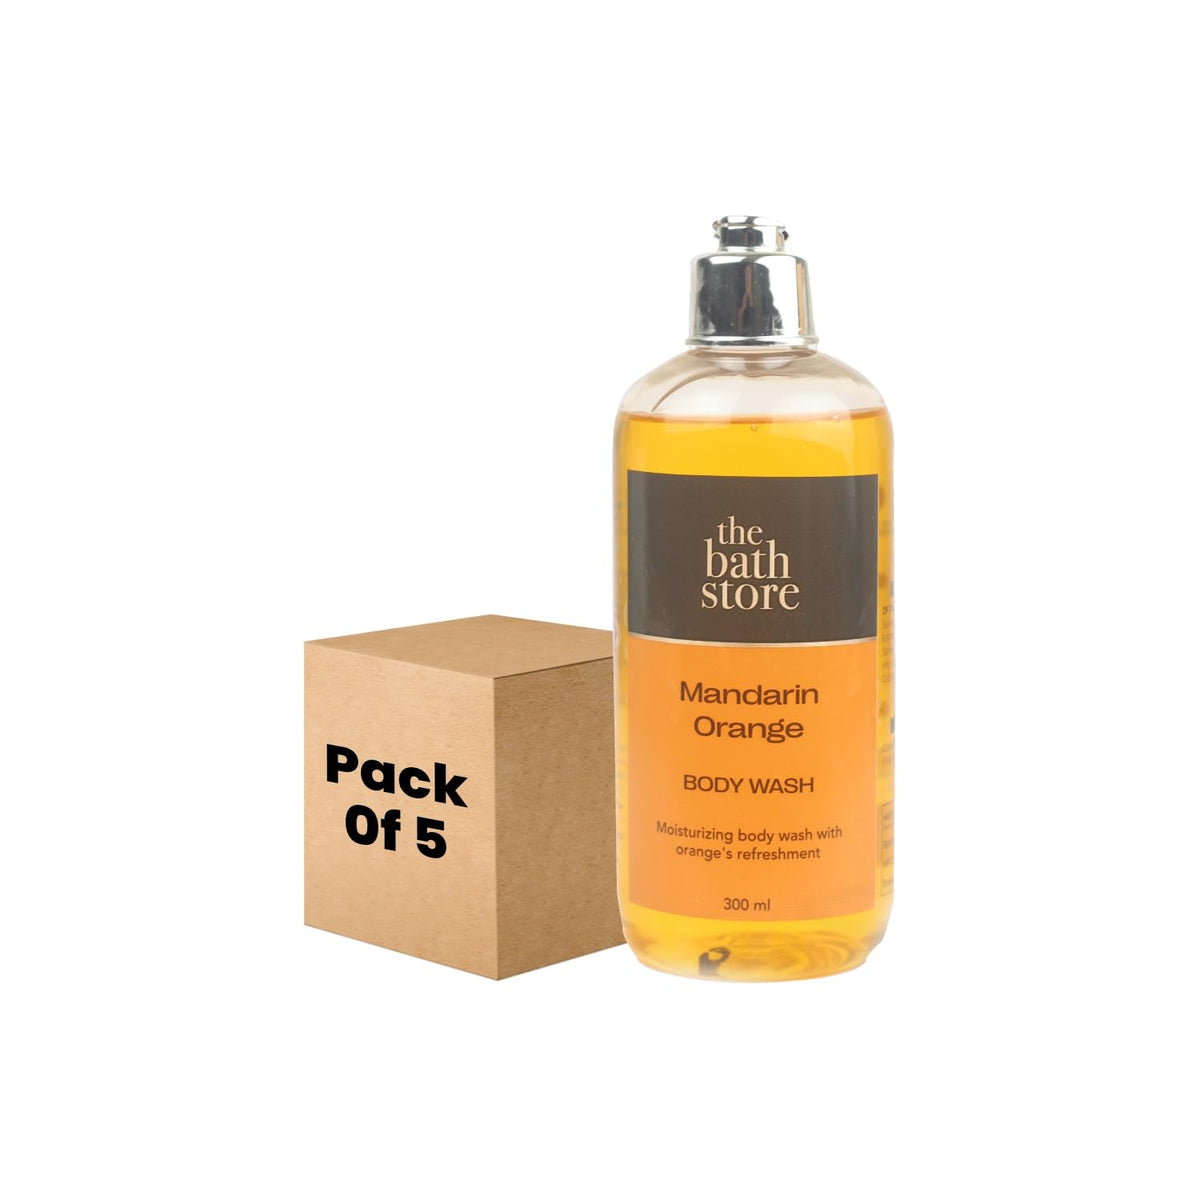 The Bath Store Mandarin Orange Body Wash - Deeply Cleansing | Nourishing Liquid Soap | Men and Women - 300ml (Pack of 5)